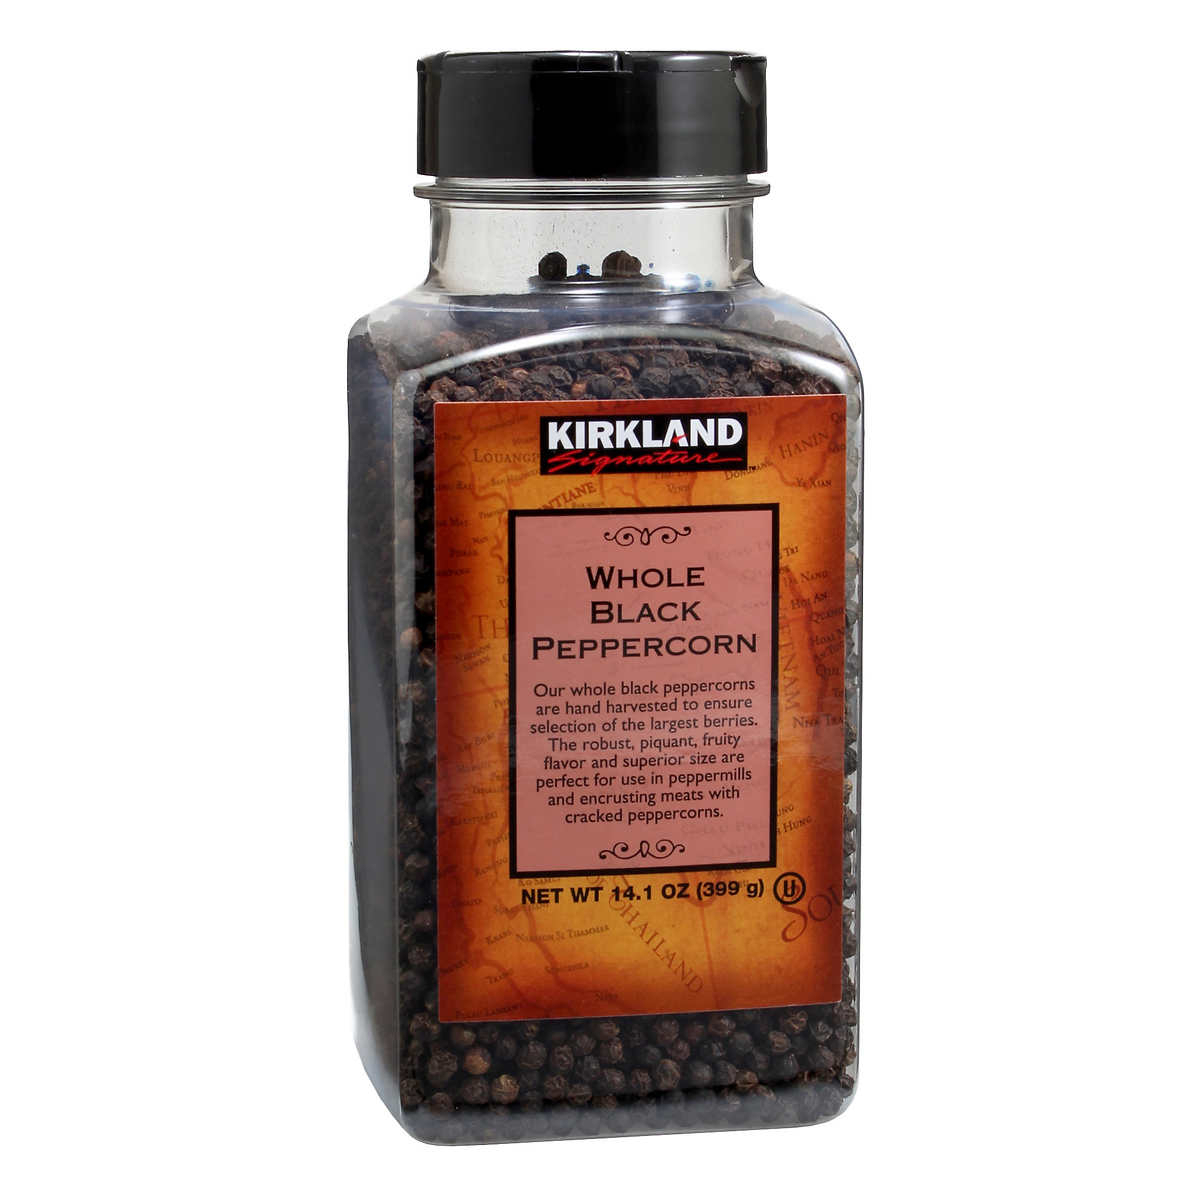 Kirkland Signature Whole Black Peppercorn, 14.1 Oz